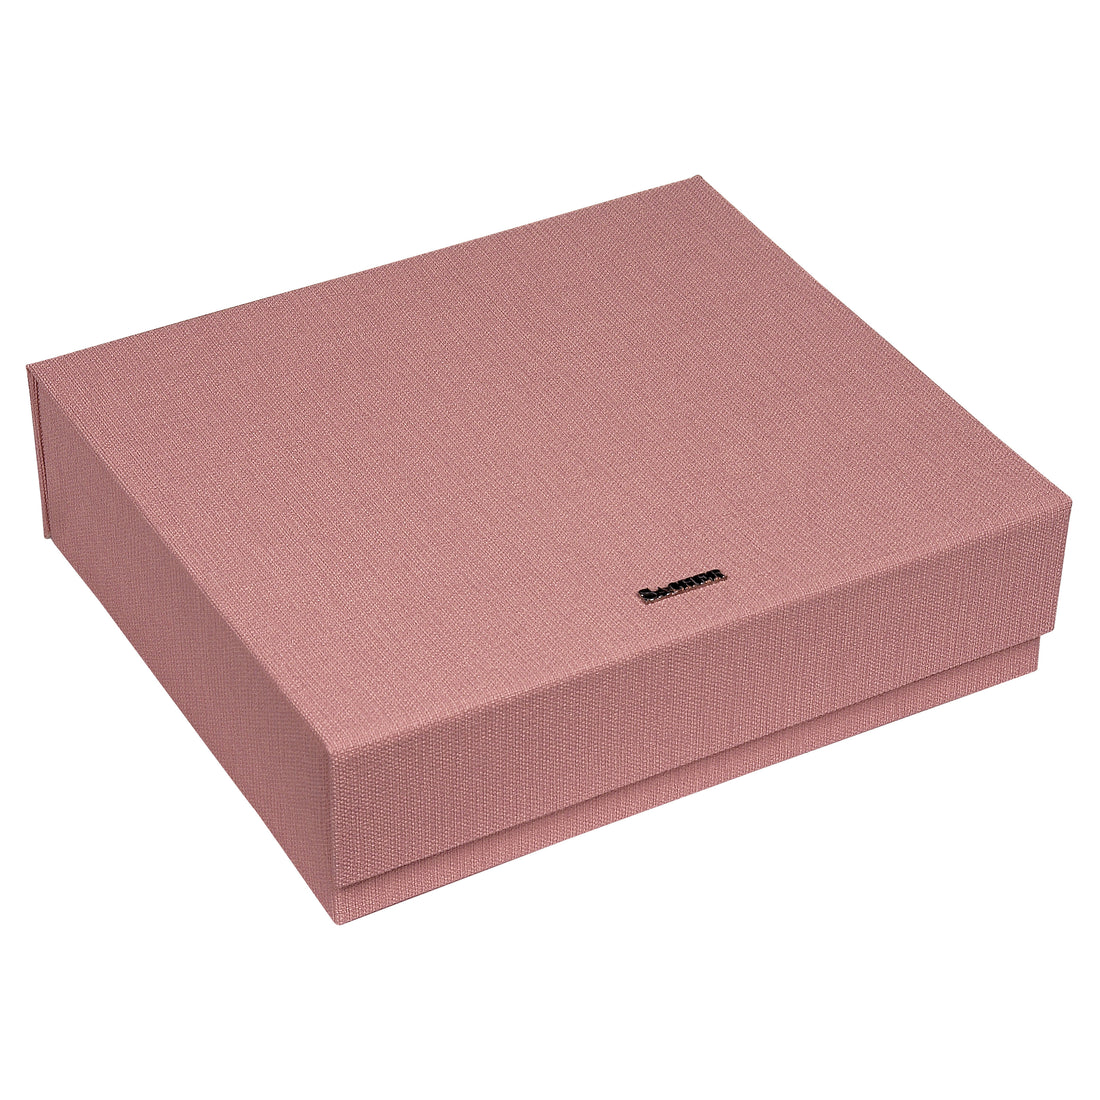 Schmuckbox Nora pastello / rosa 1846 SACHER Store Manufaktur Offizieller | –